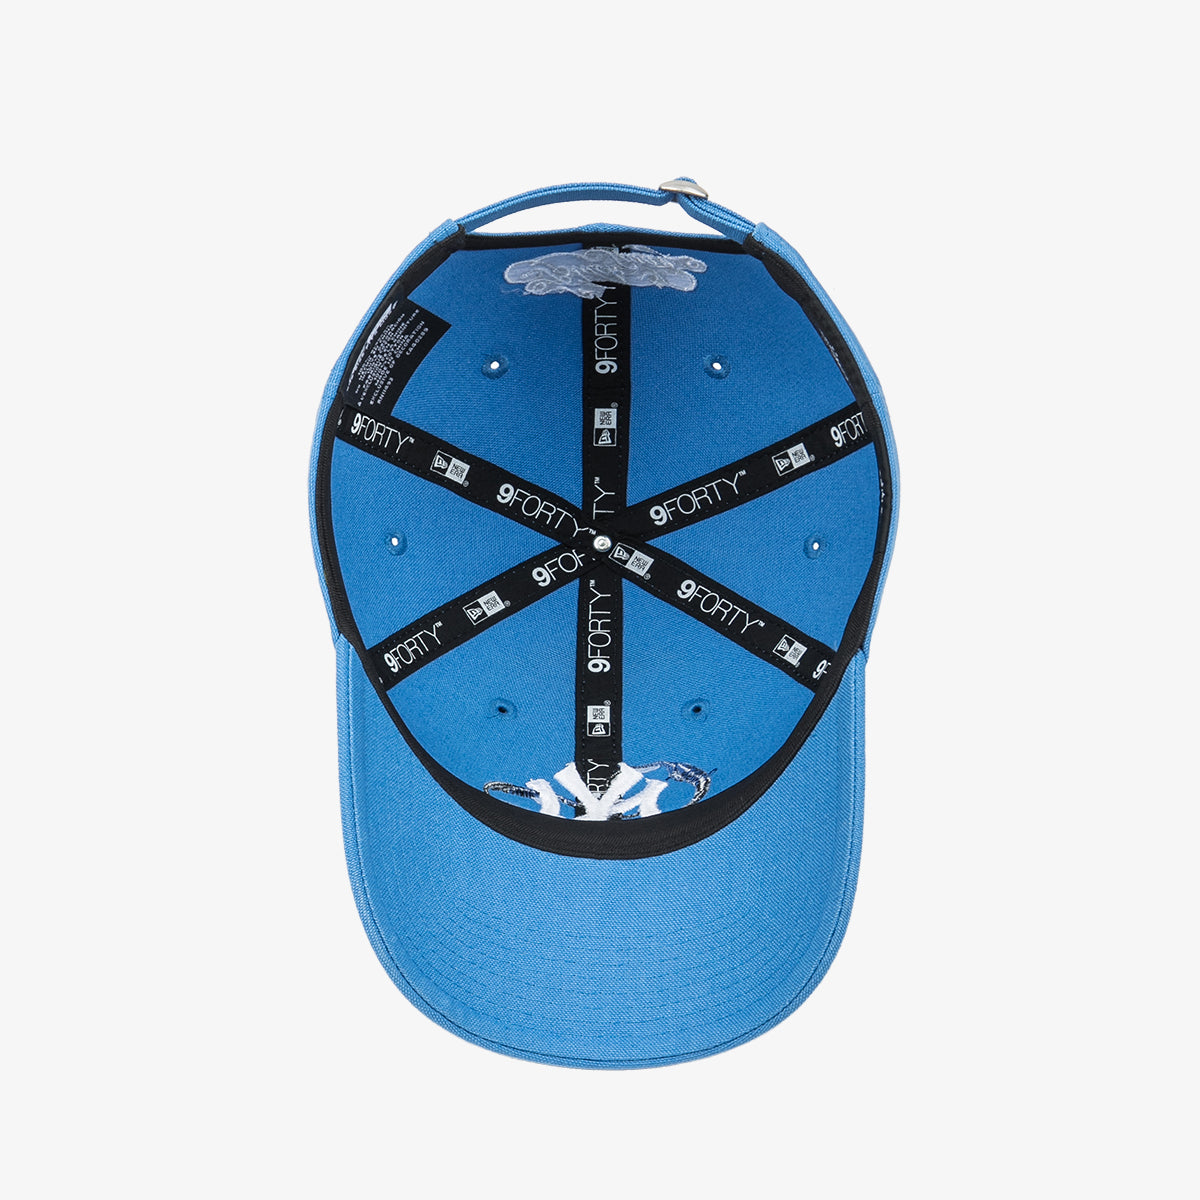 BTS BLACK SWAN New York Yankees Unstructured Ball Cap (Blue)